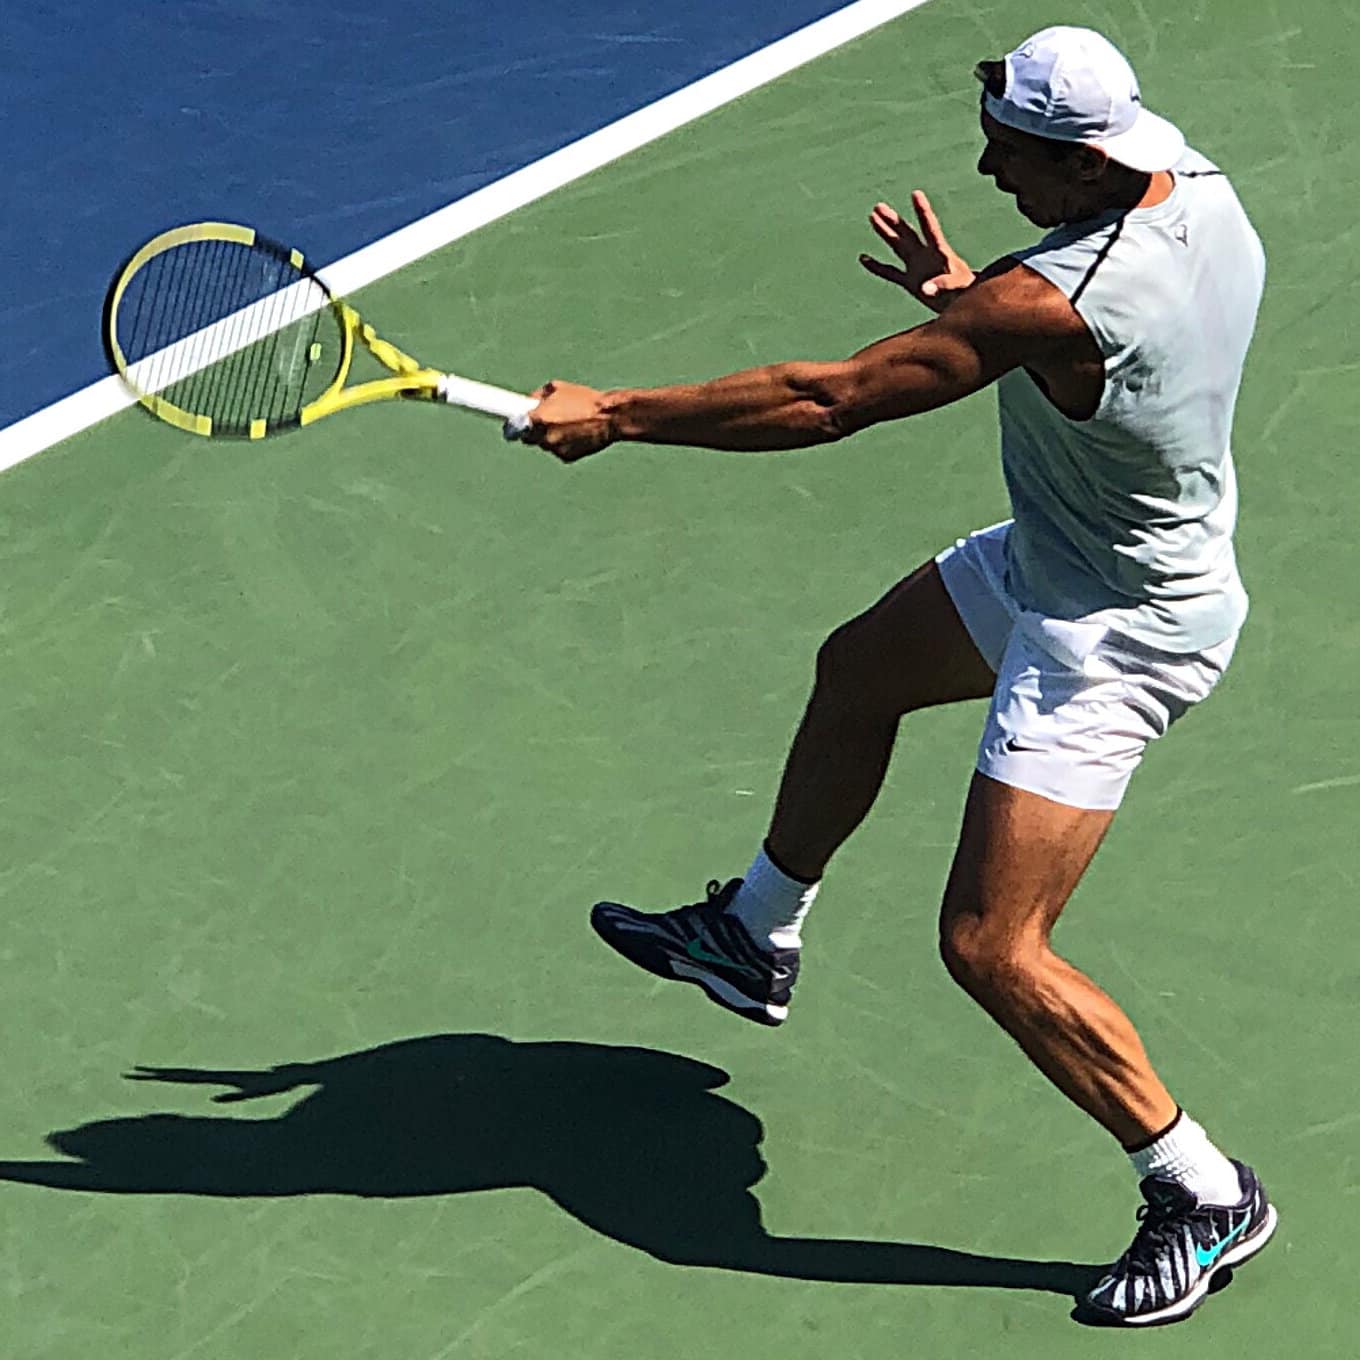 Rafael Nadal hitting a ball on the tennis court.